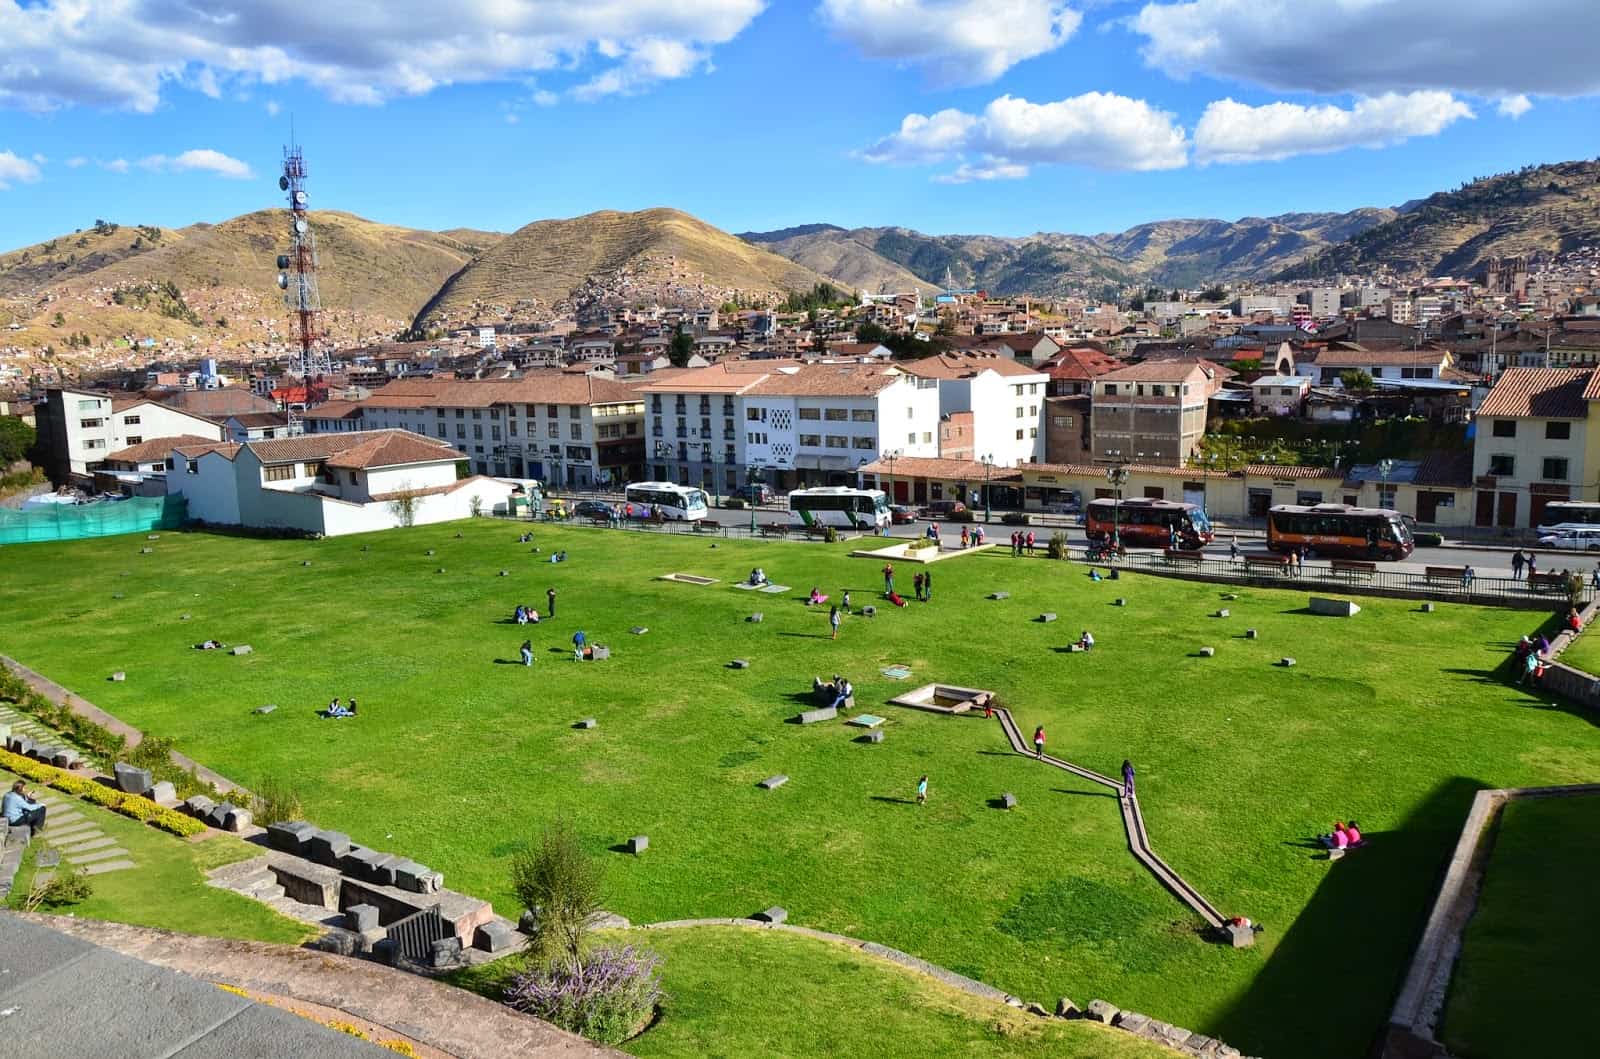 Jardín Sagrado in Cusco, Peru